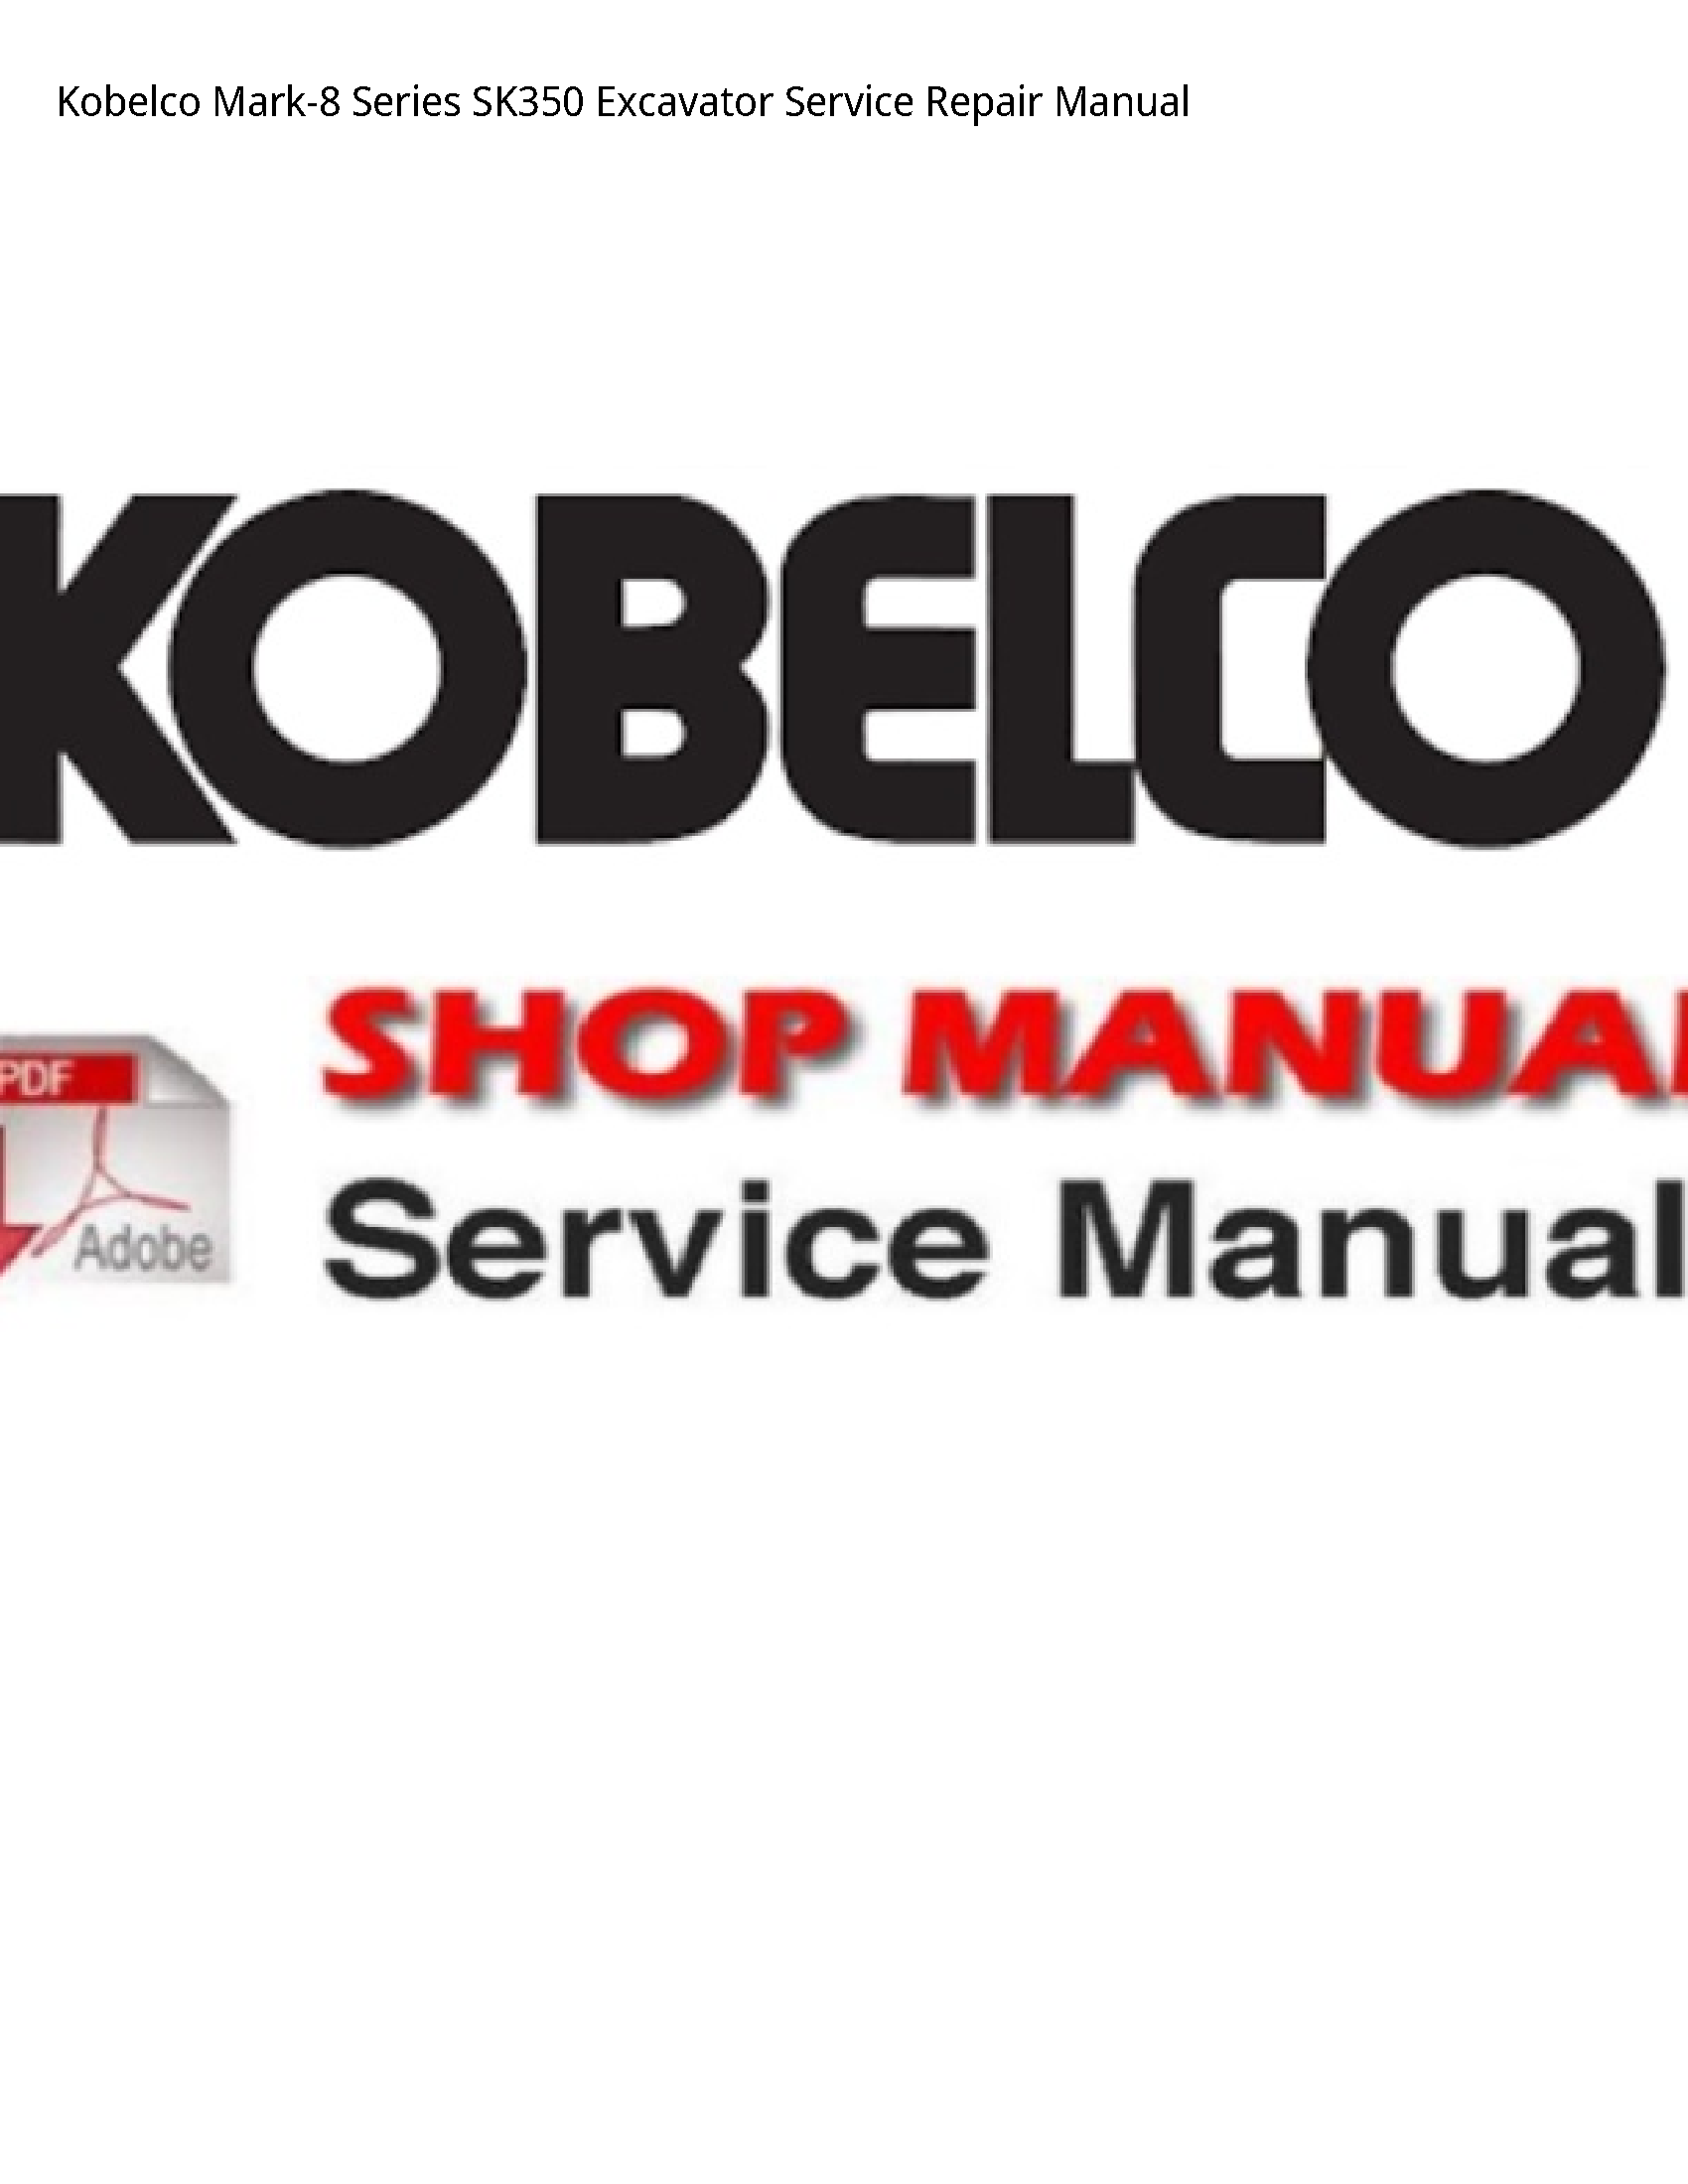 Kobelco Mark-8 Series Excavator manual